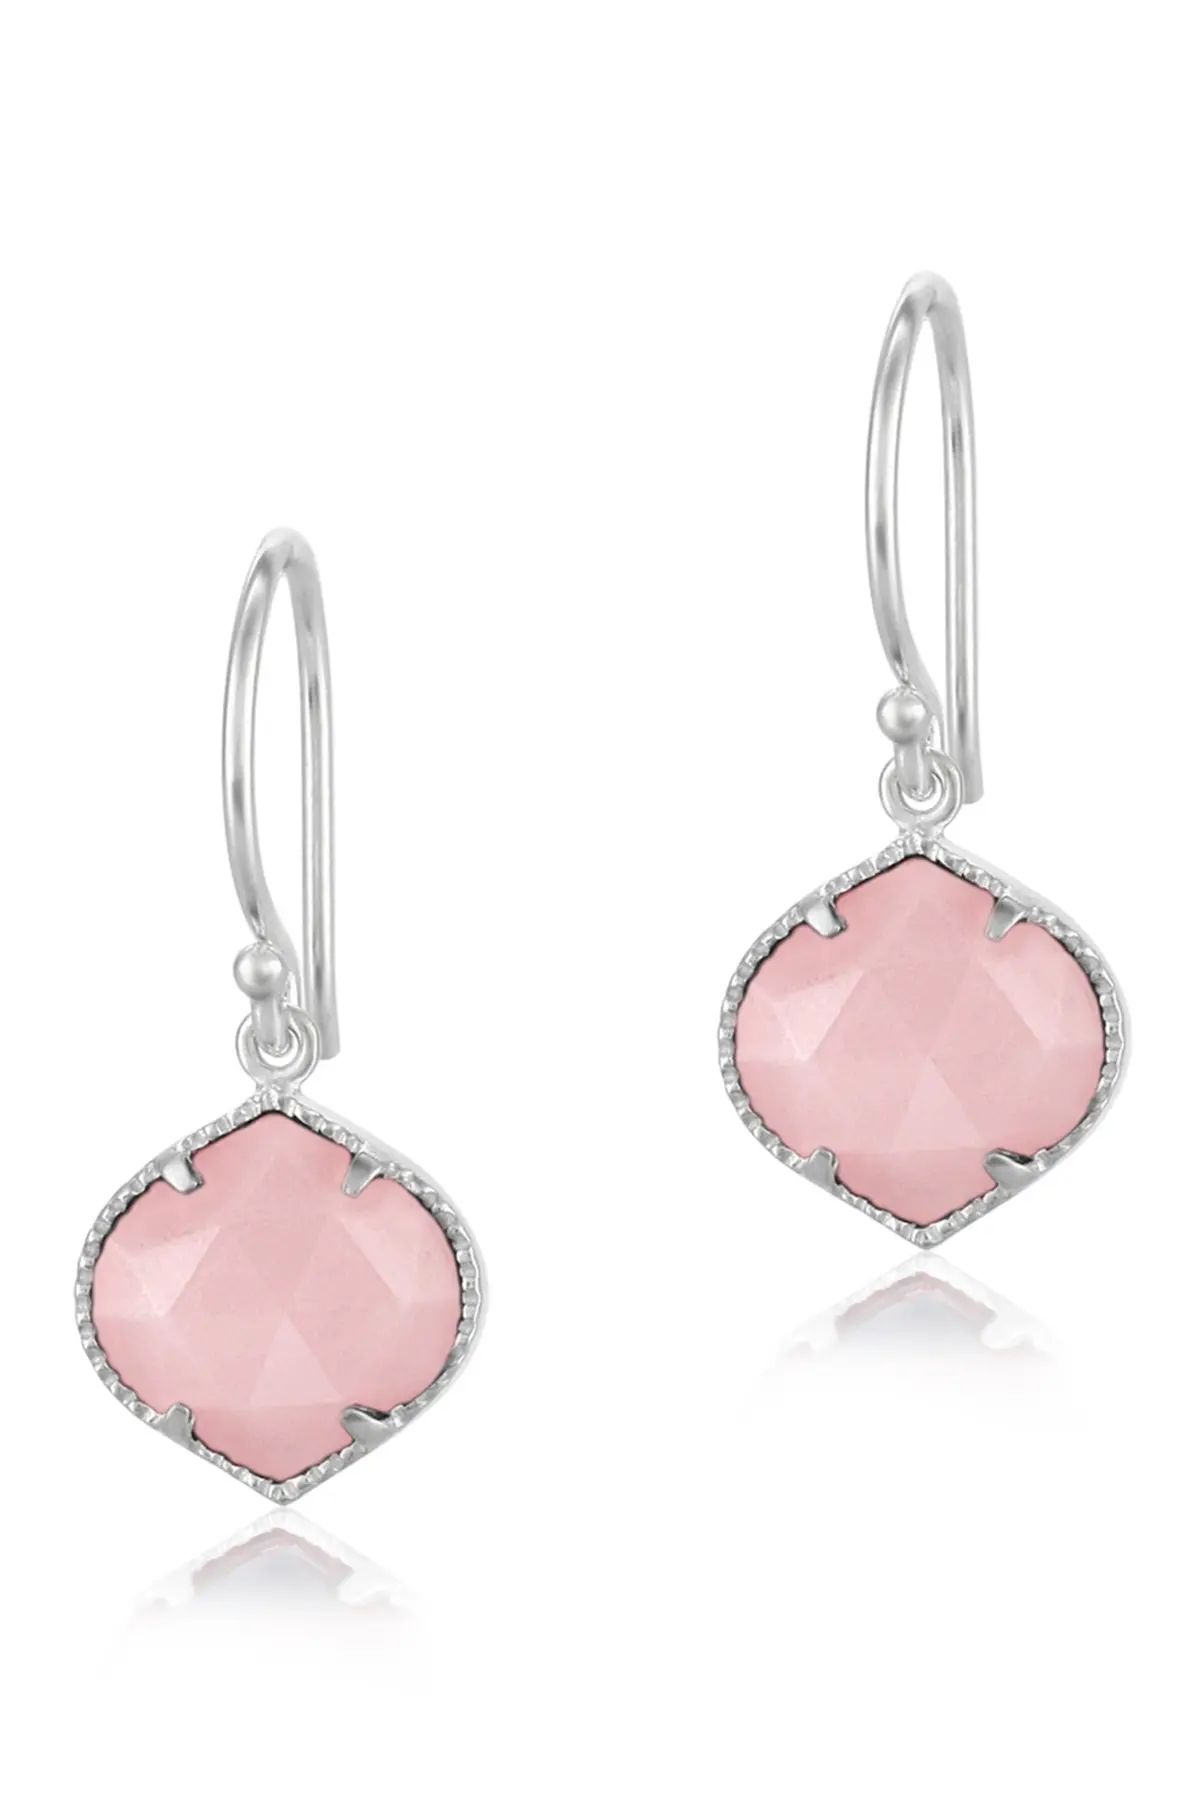 LEGEND AMRAPALI SILVER Sterling Silver Pallavi Pink Opal Drop Earrings at Nordstrom Rack | Nordstrom Rack